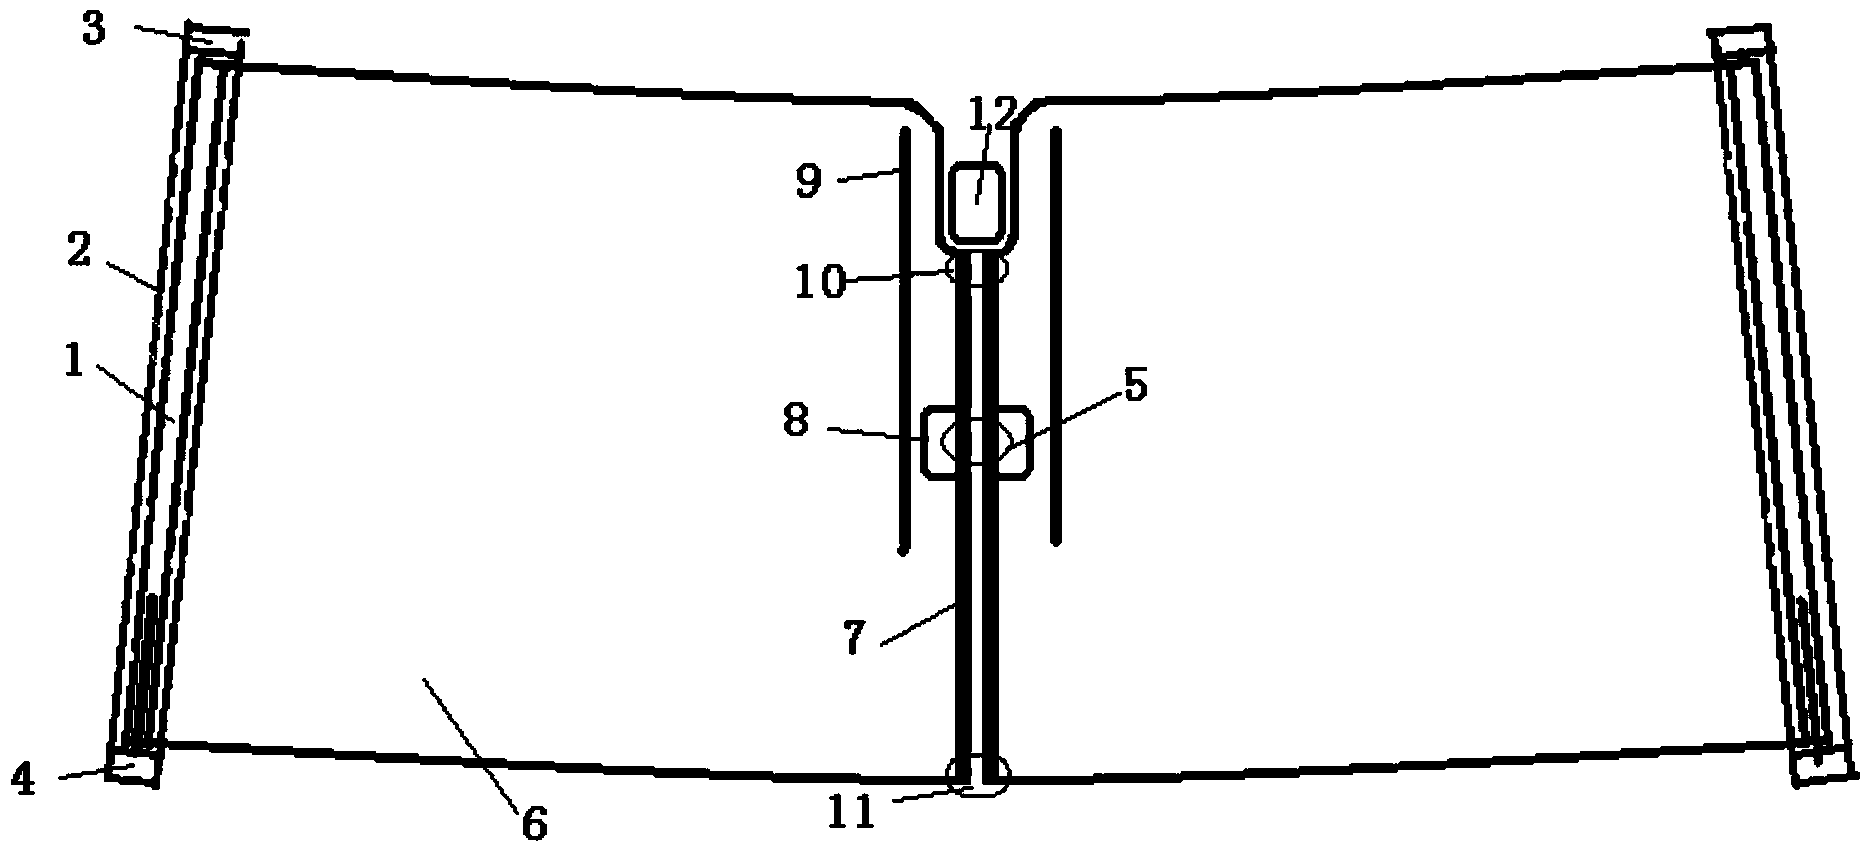 Left-right folio sunshade roller shutter for vehicle windscreen glass